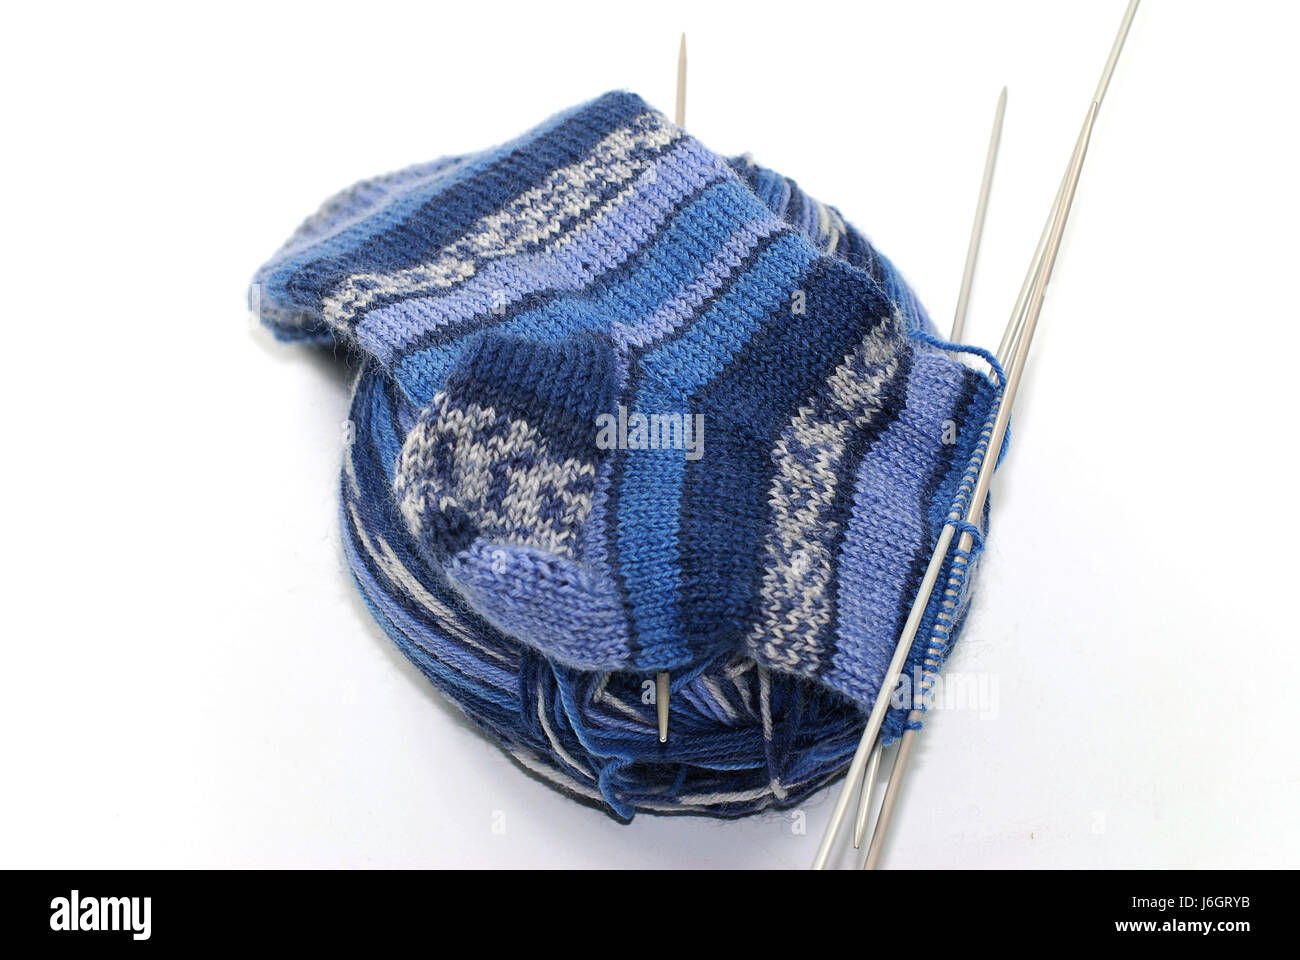 Calze di lana calze artigianale di manufatti a maglia di colore gorgeous colorati Foto Stock